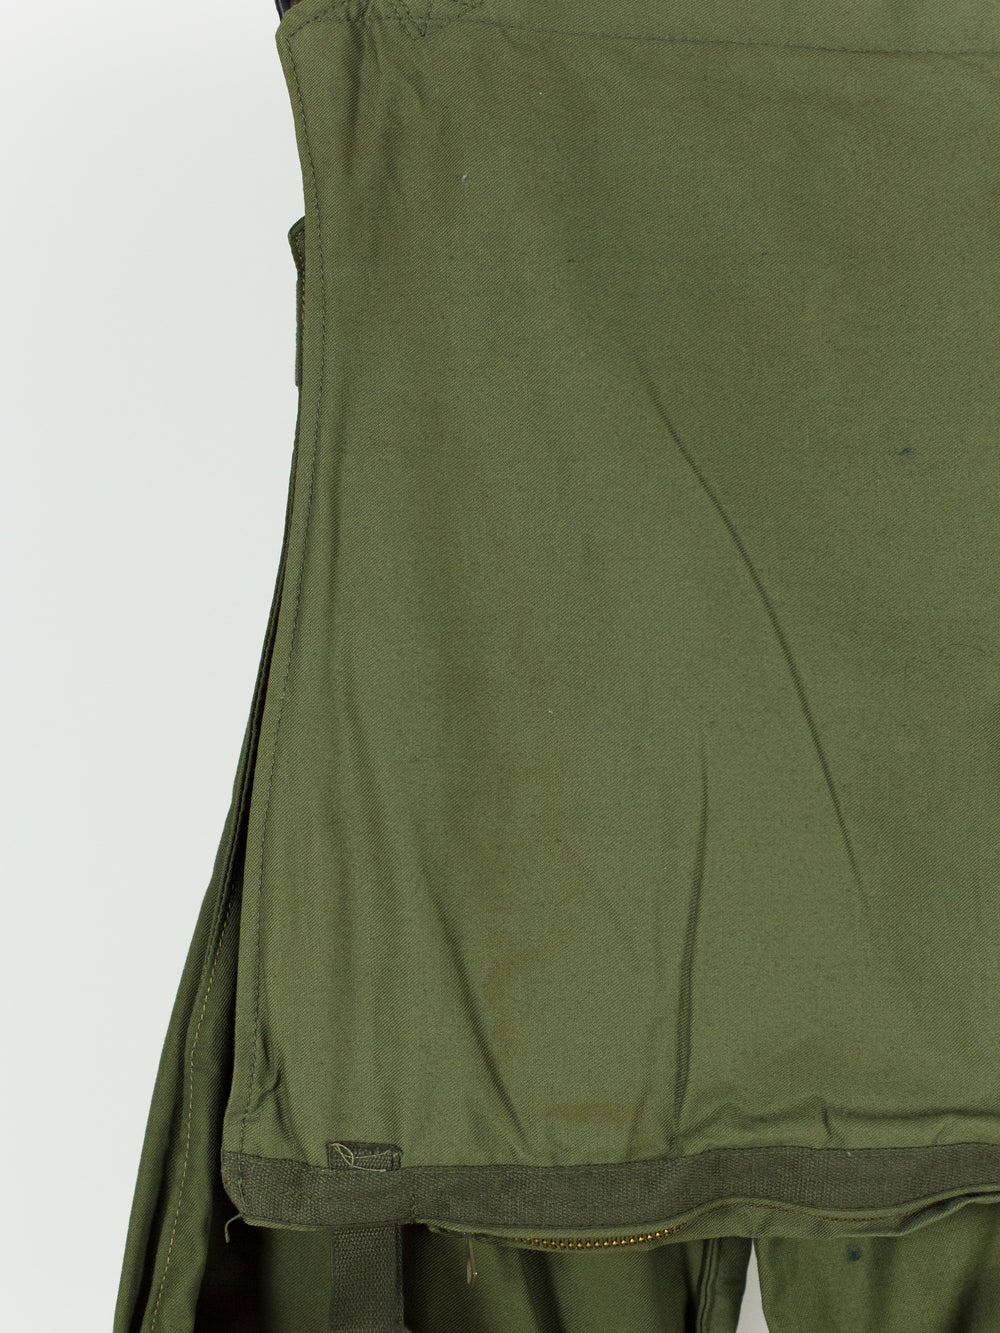 Vintage Military Life Preserver Vest